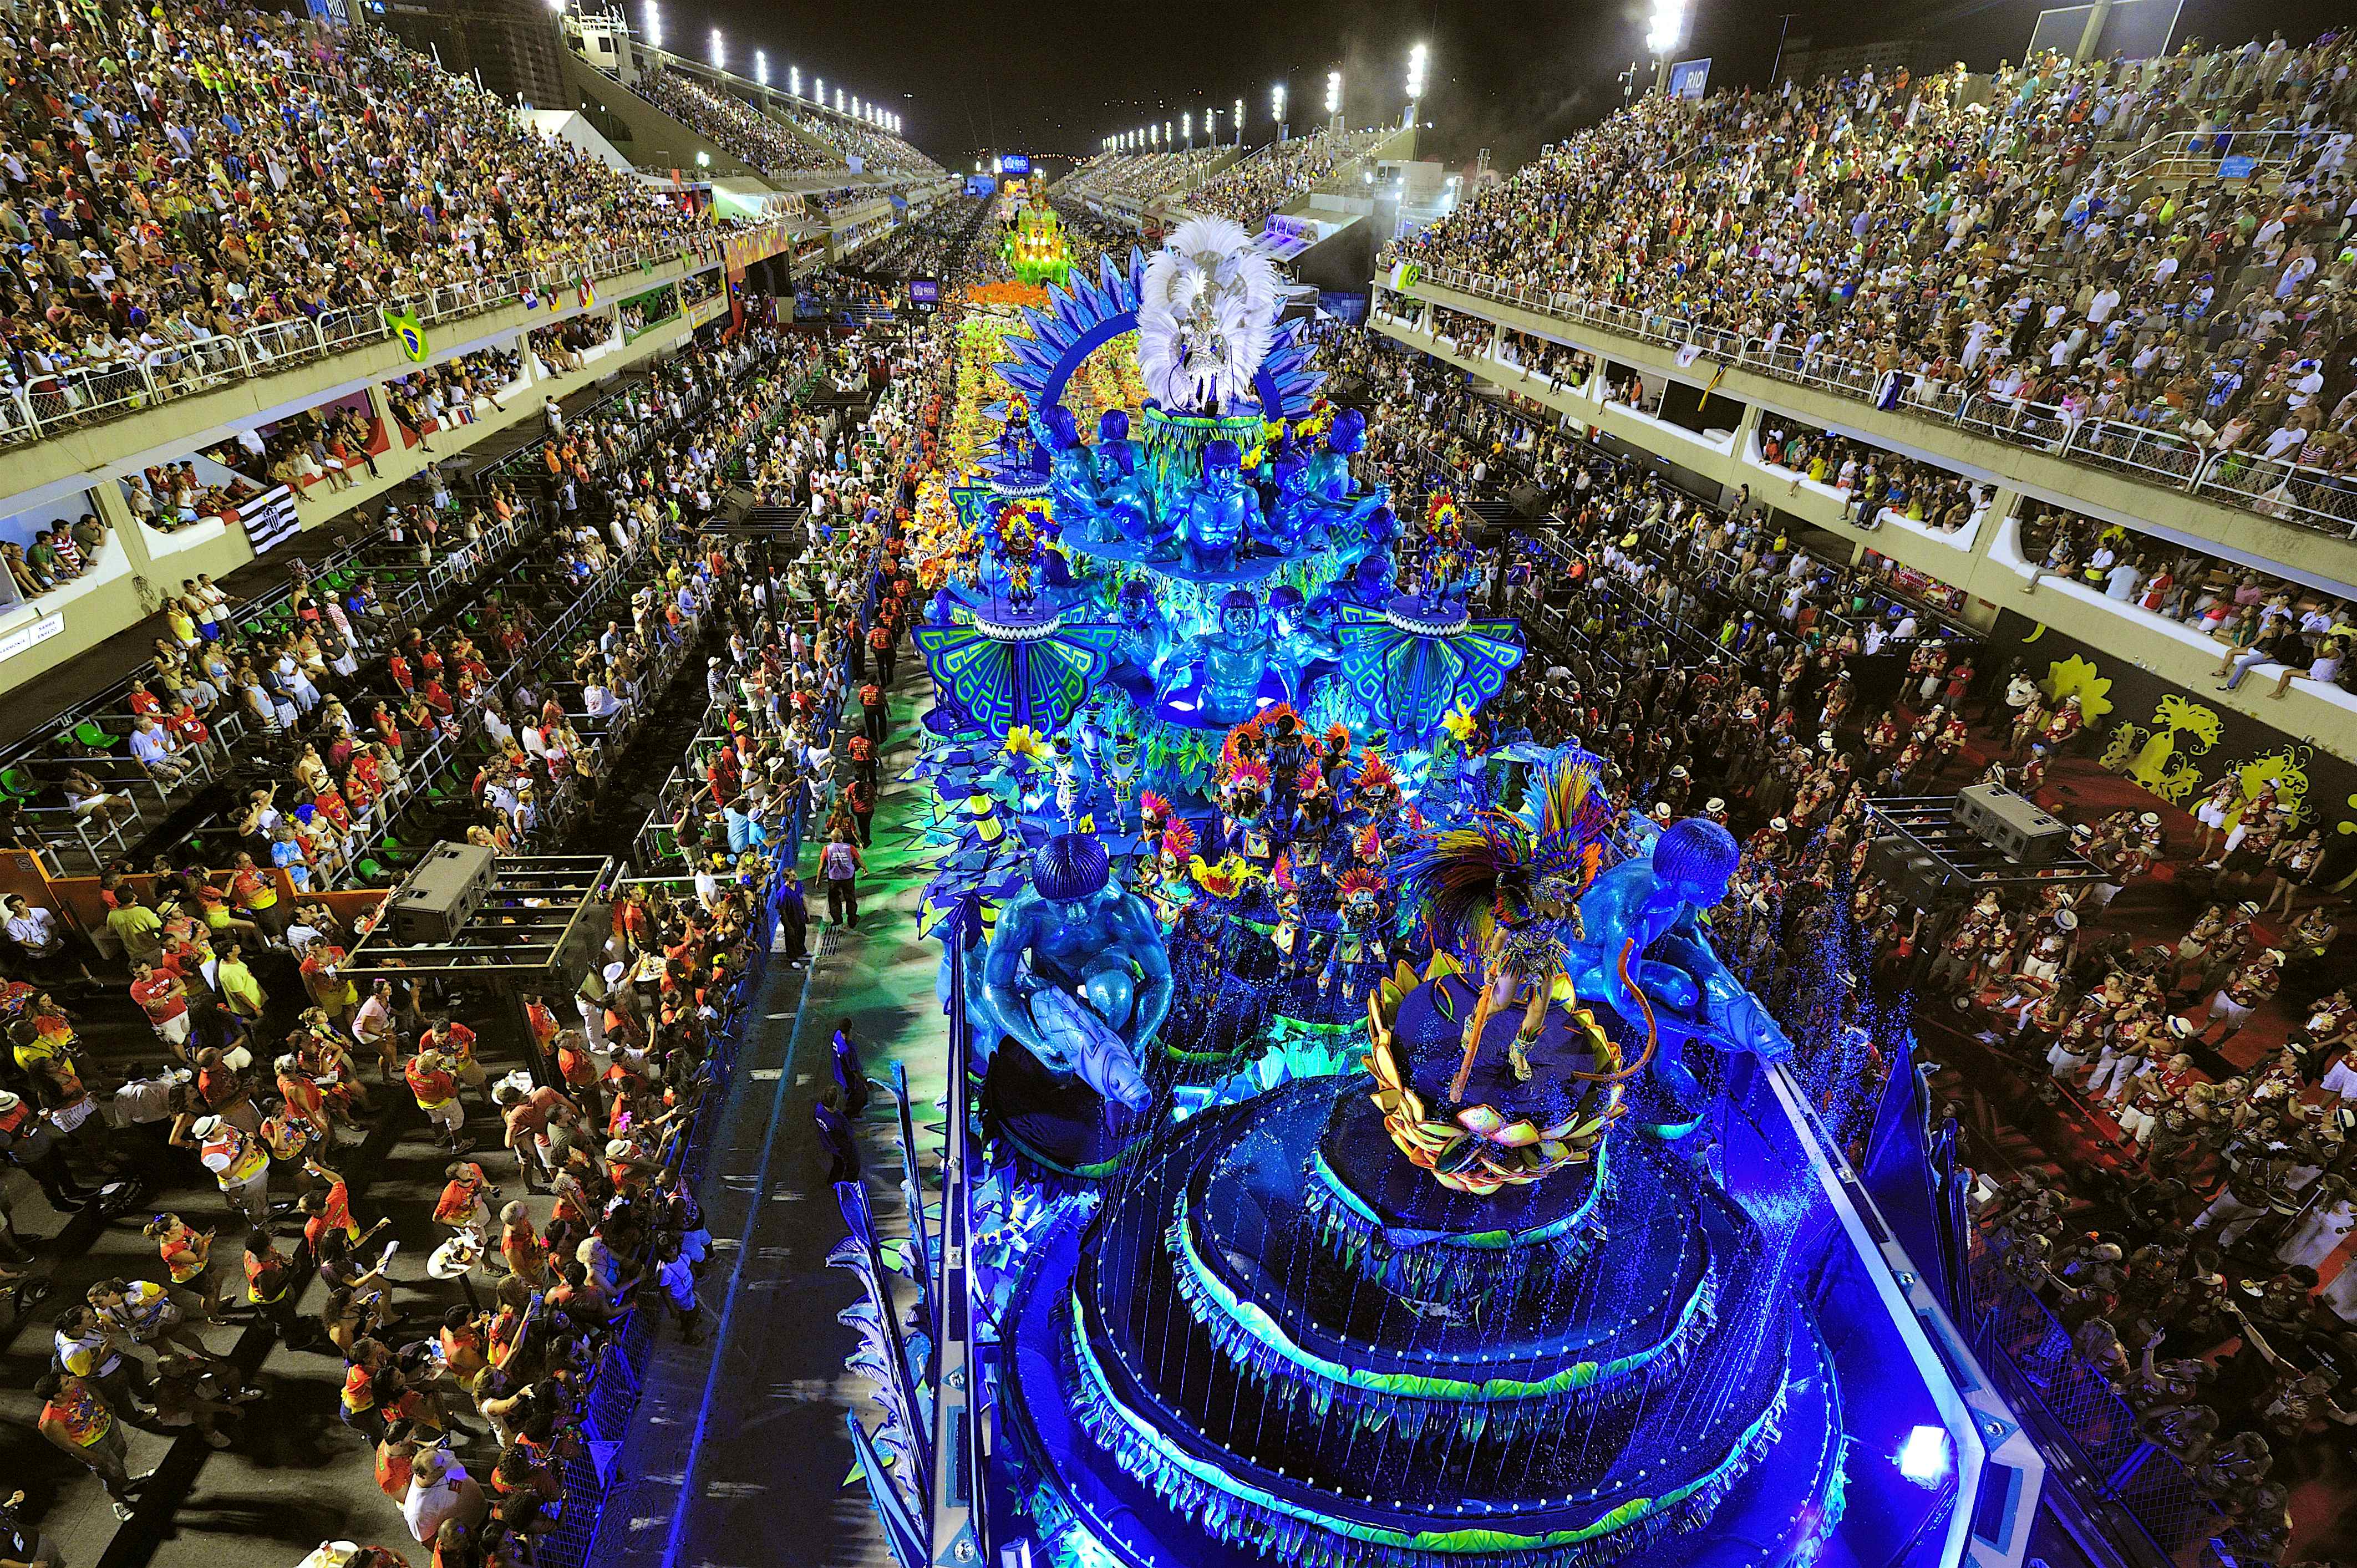 Rio de Janeiro’s famous carnival will be postponed in 2021